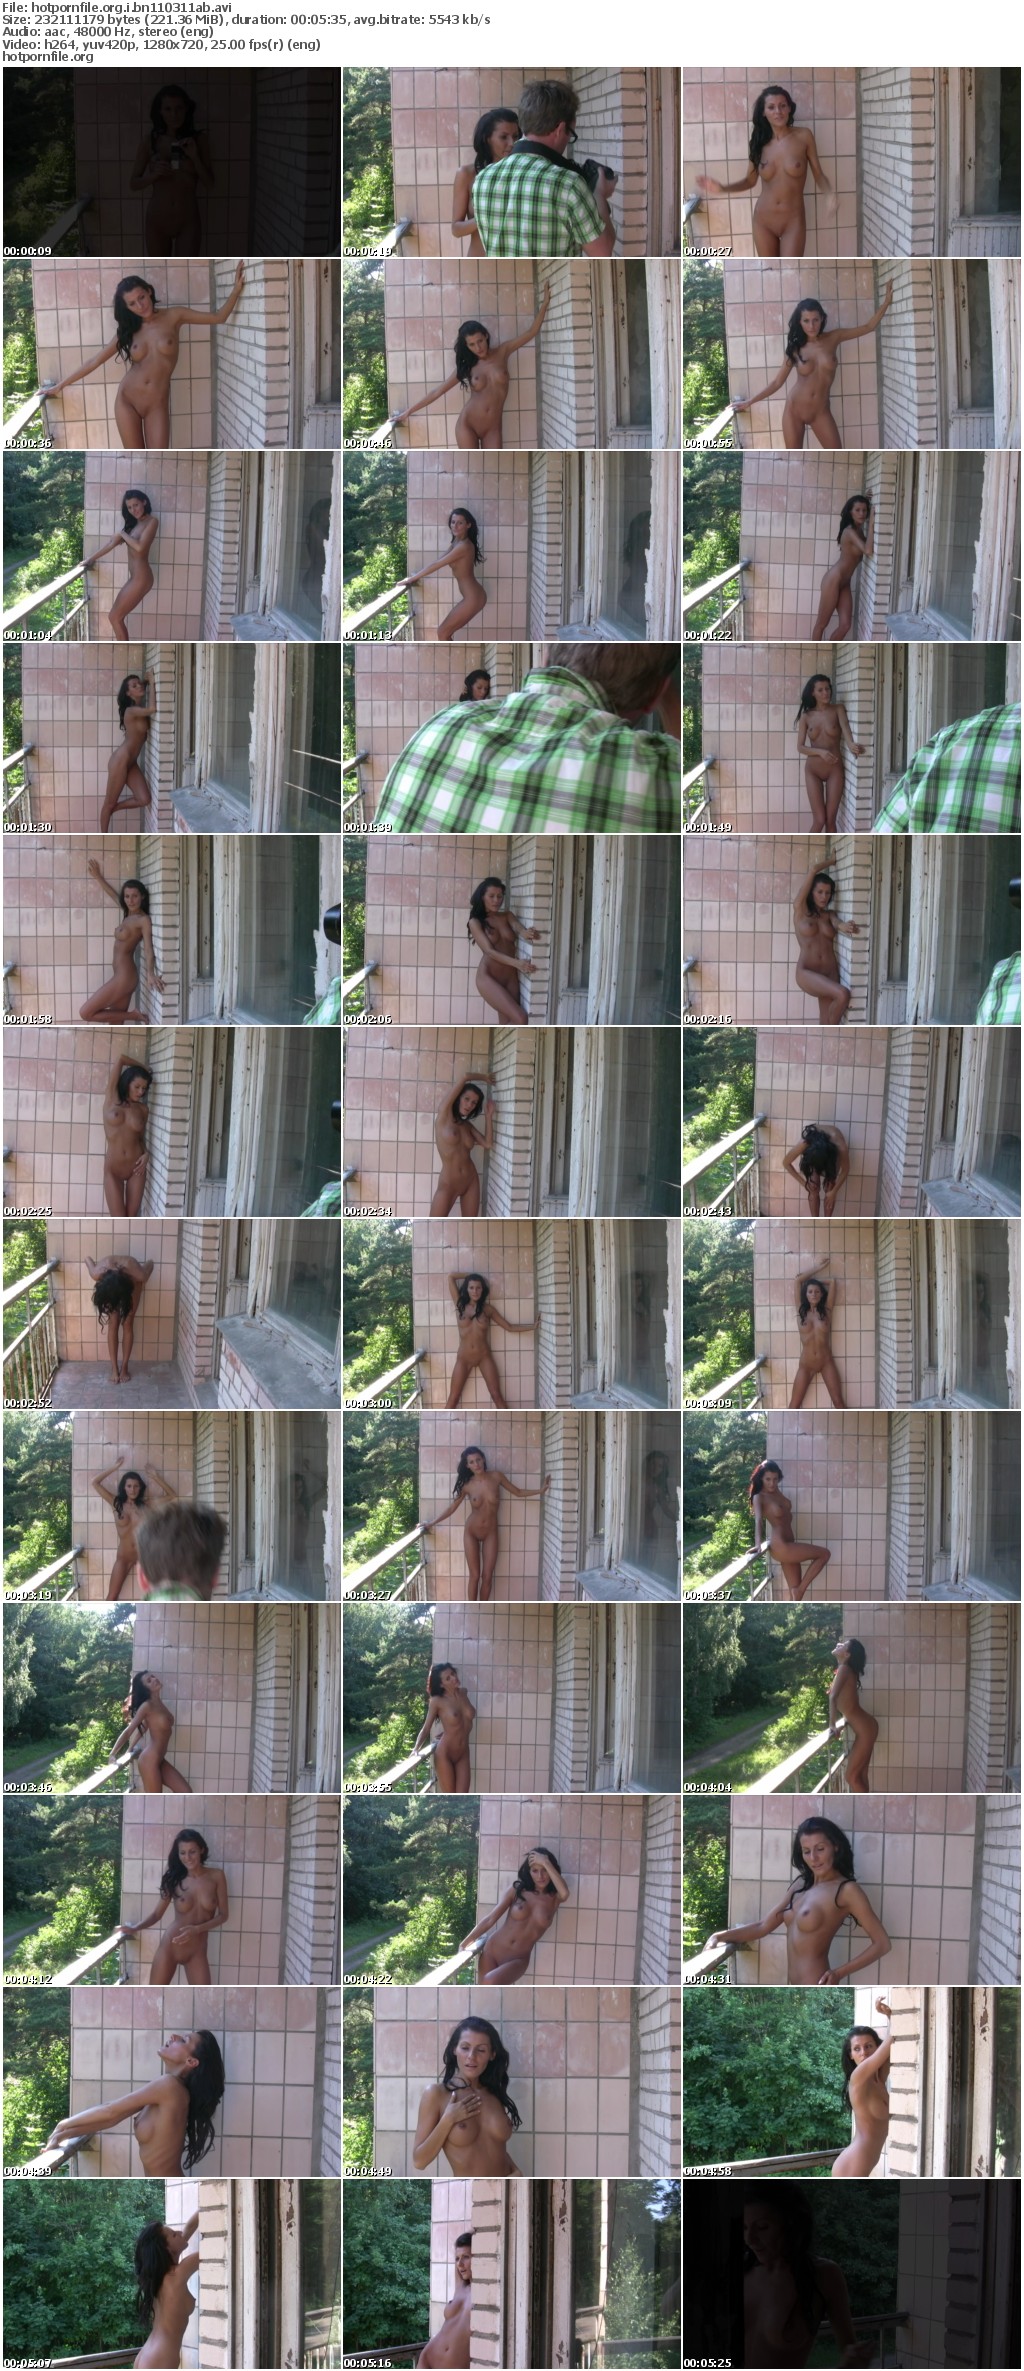 ._beautiful-nude-anna-balcony_screens_hotpornfile.org.i.bn110311ab_s.jpg